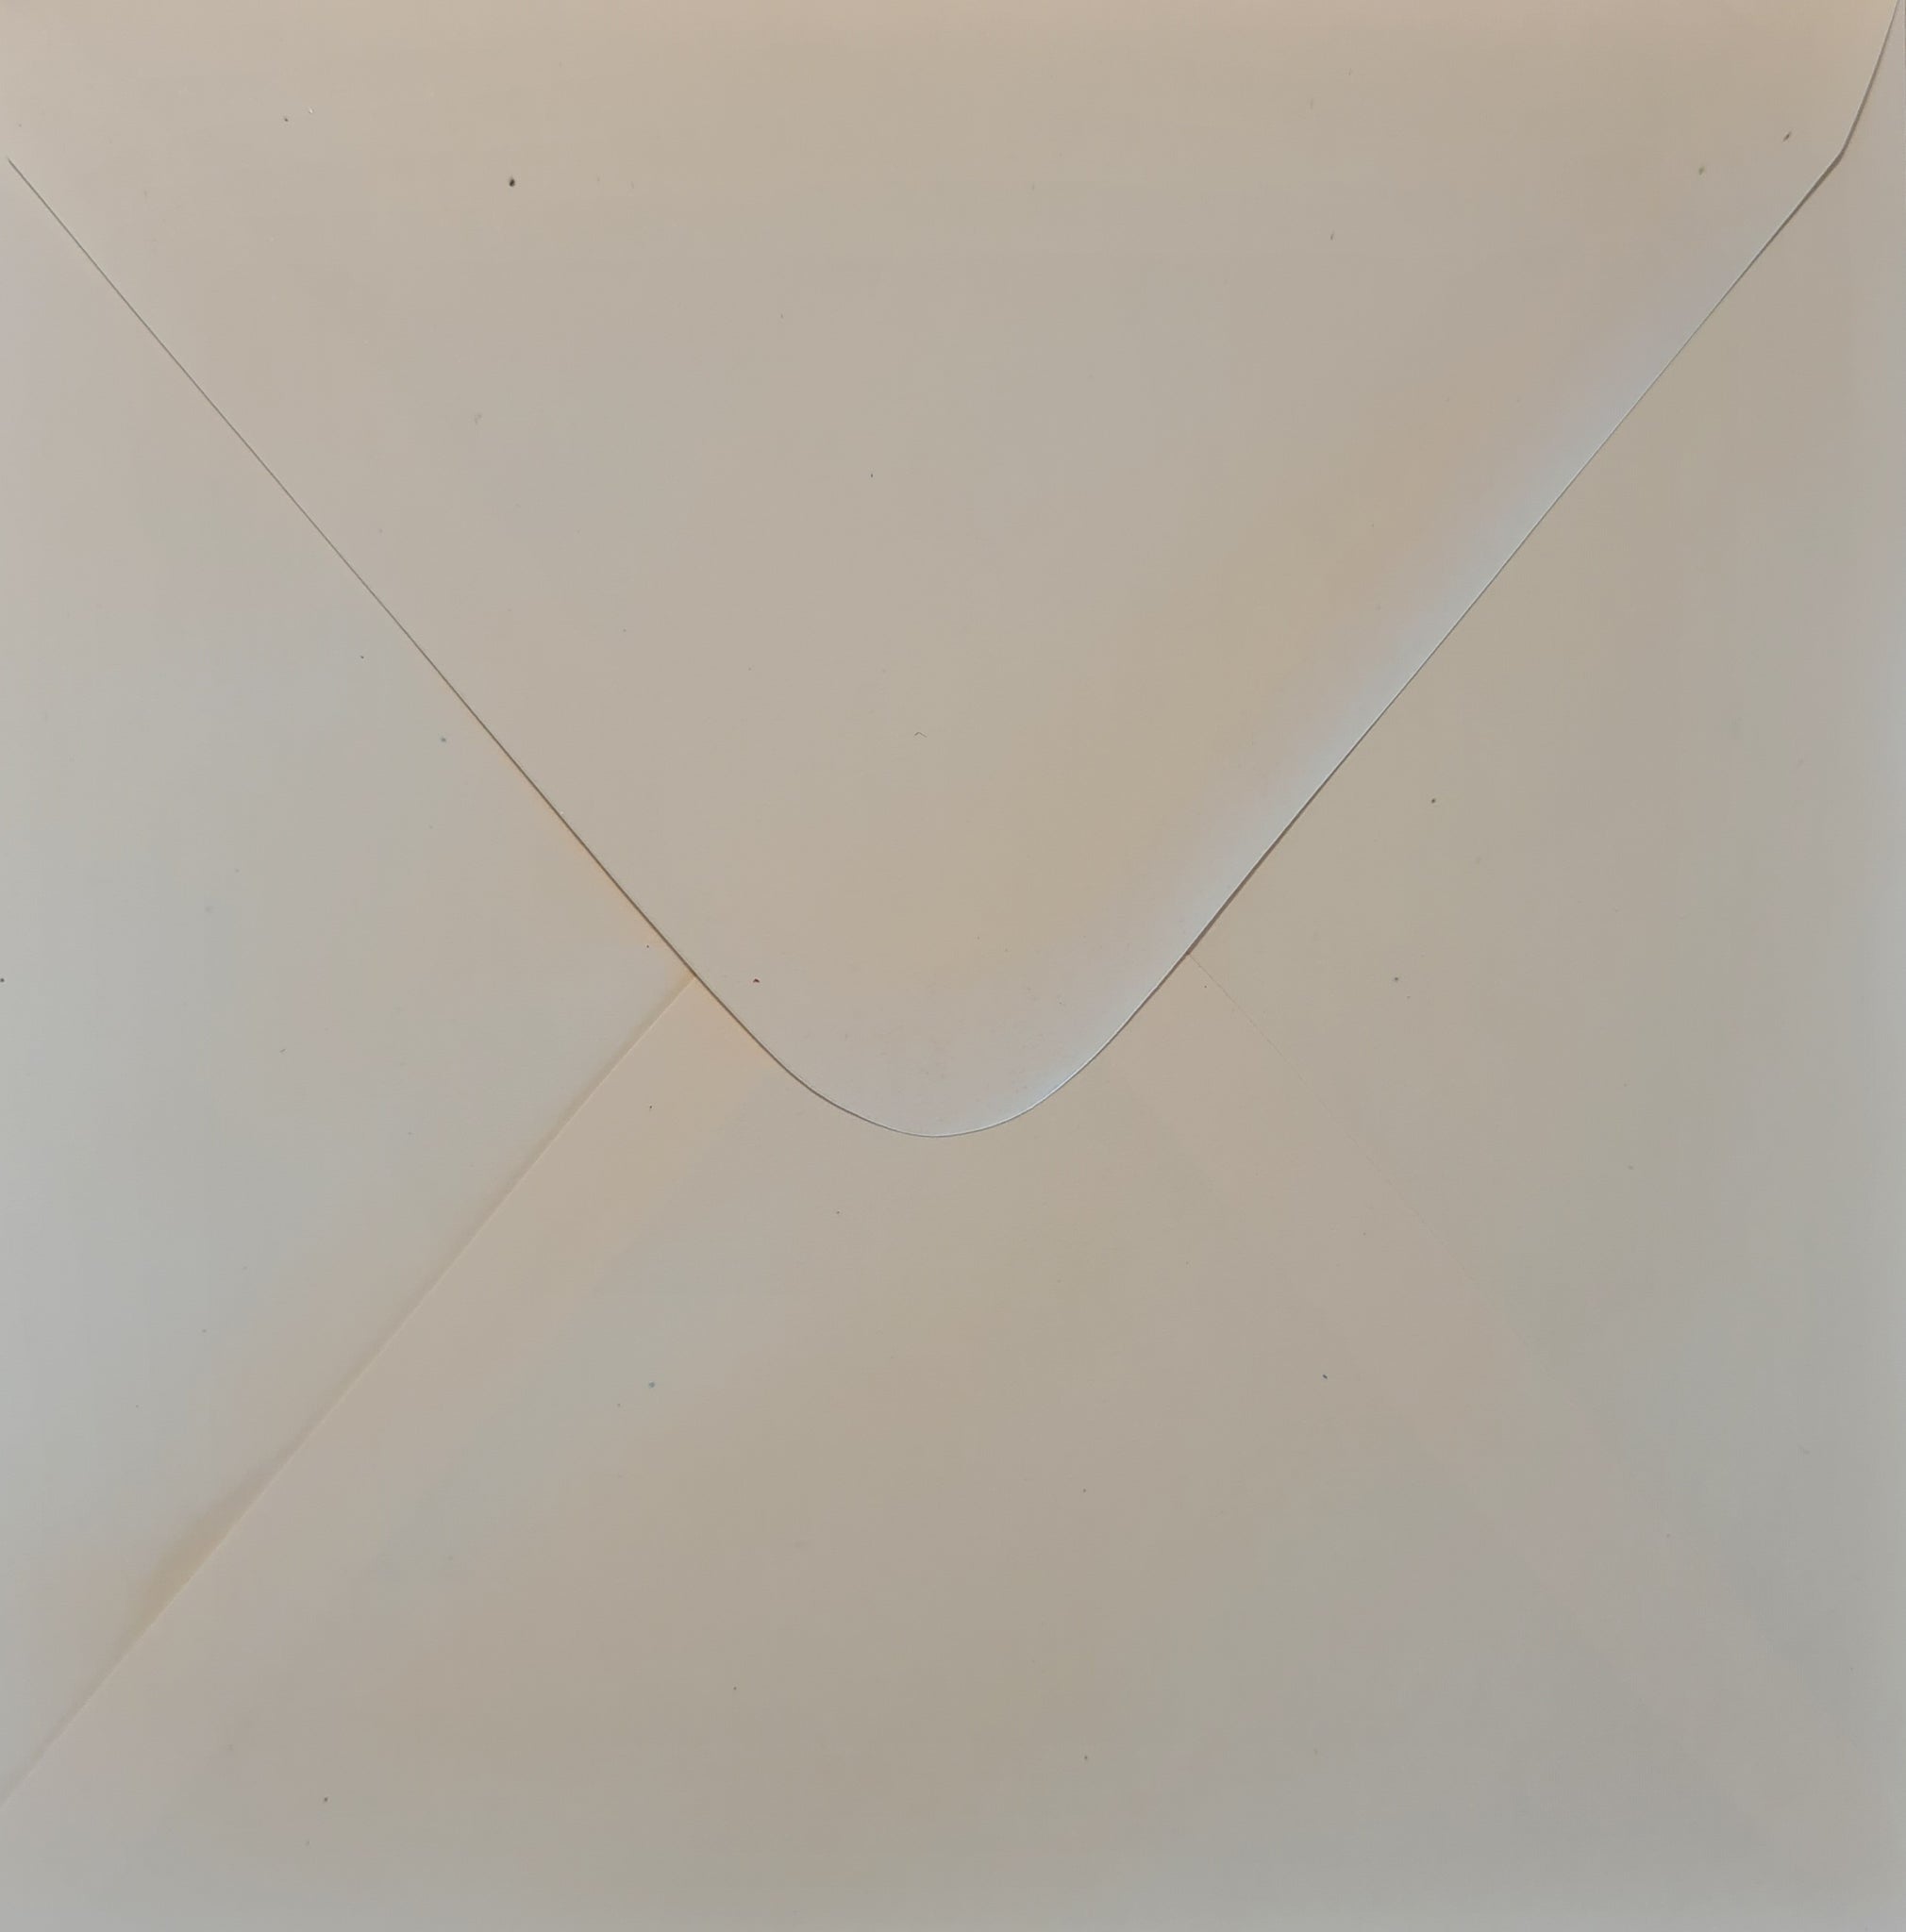 Extra Envelopes